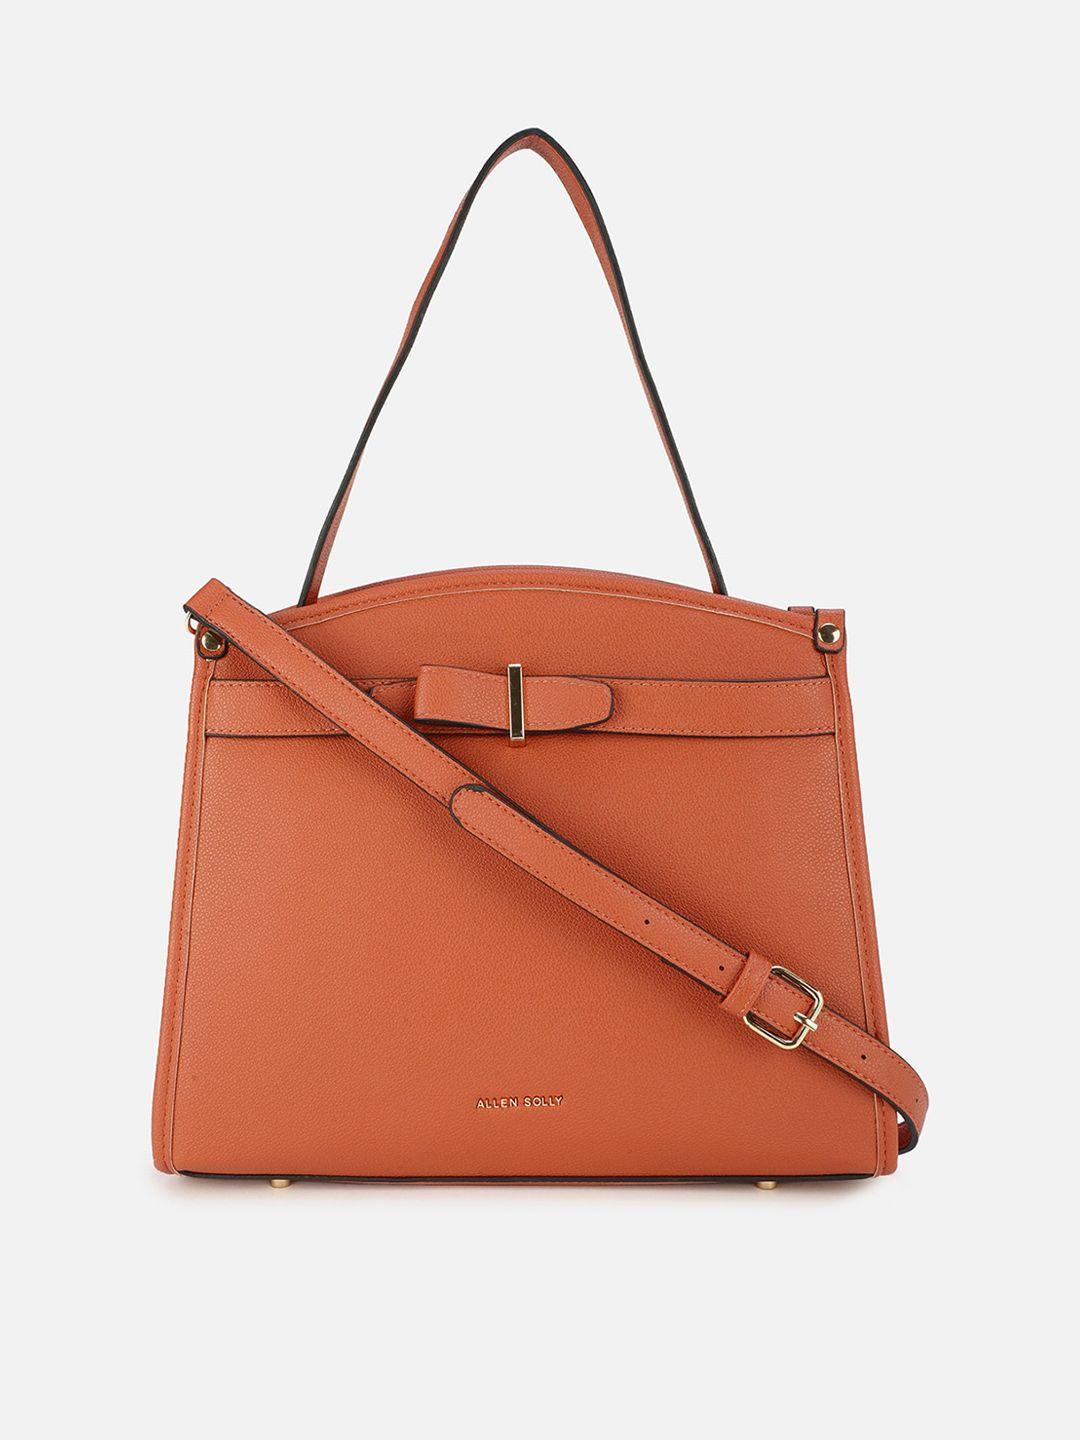 allen solly orange pu structured satchel with bow detail